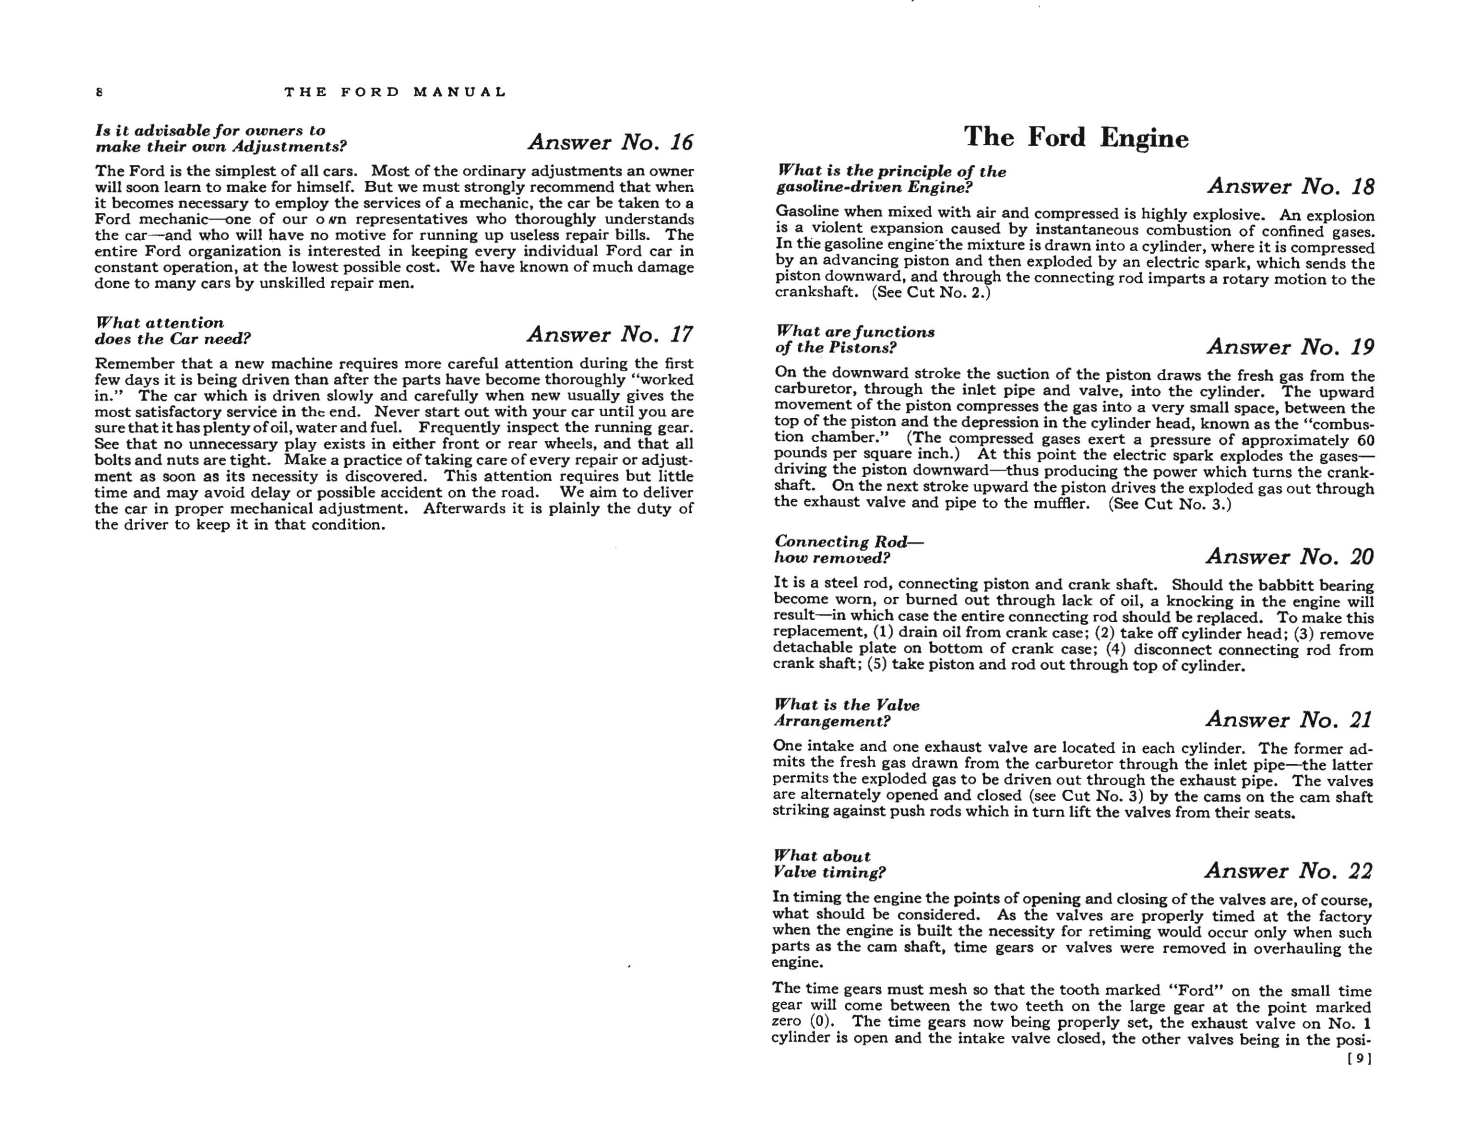 n_1924 Ford Owners Manual-08-09.jpg